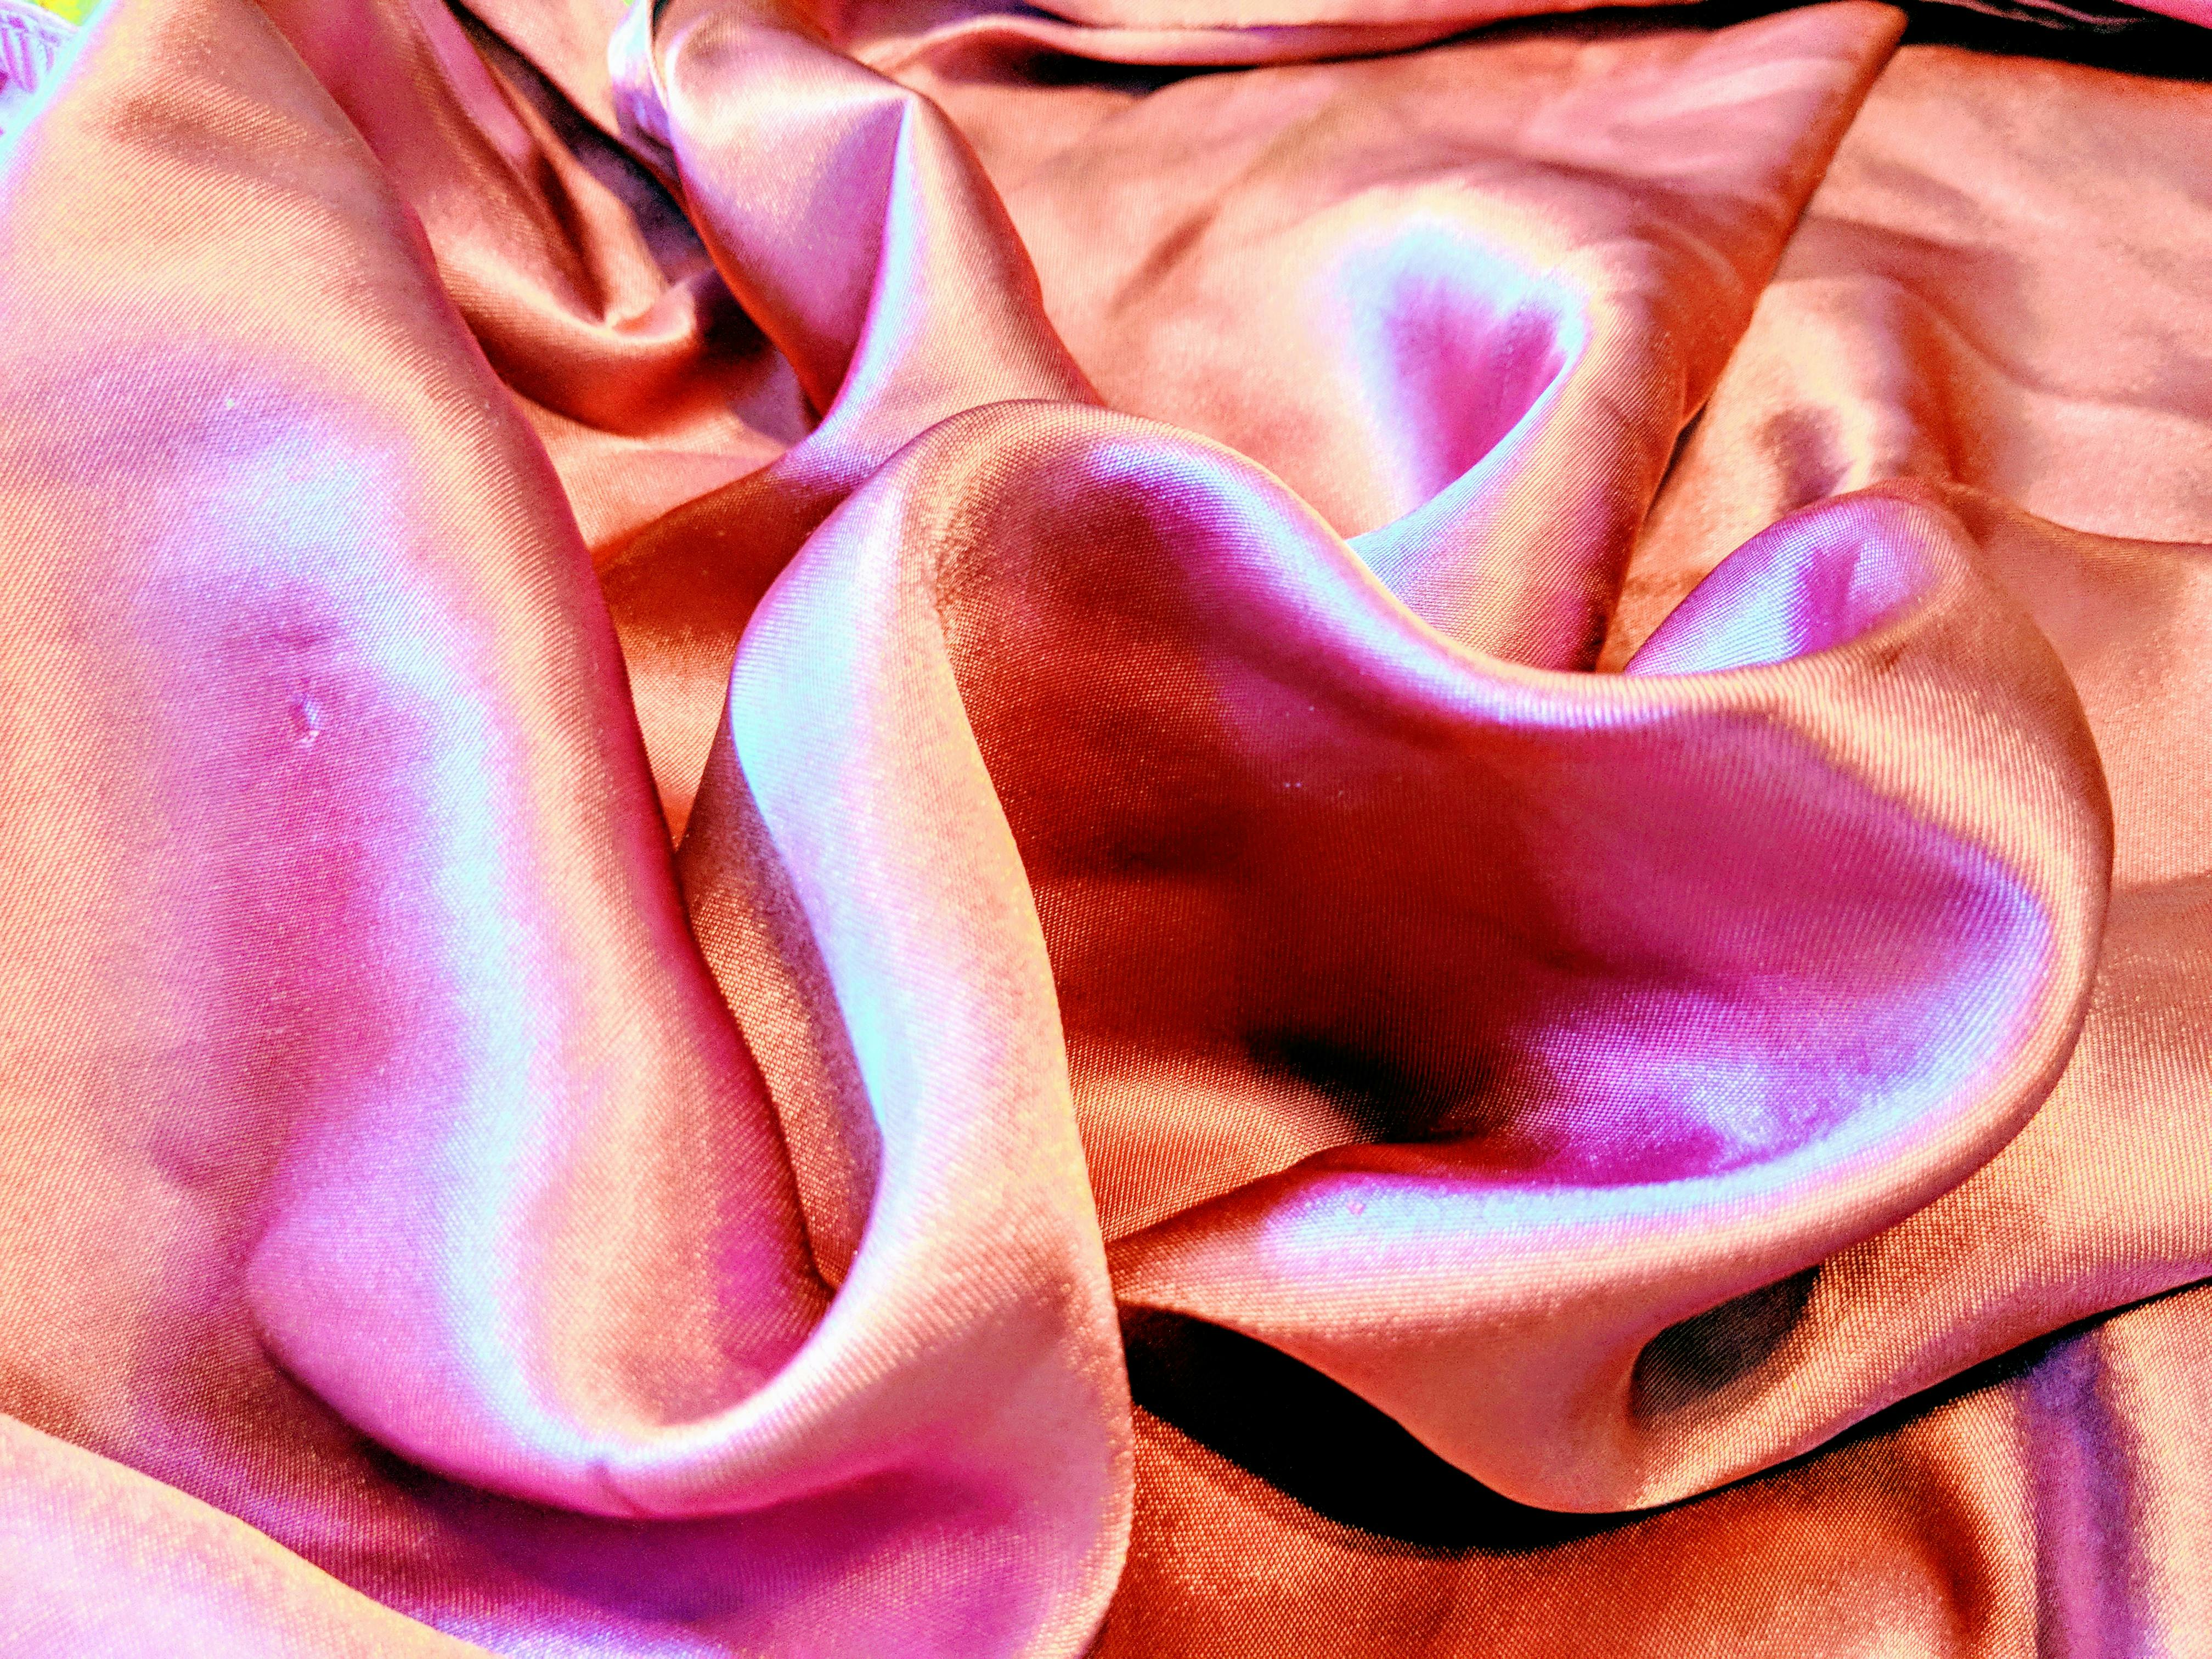 Free stock photo of Heart photo, hot pink satin, pink satin sheets